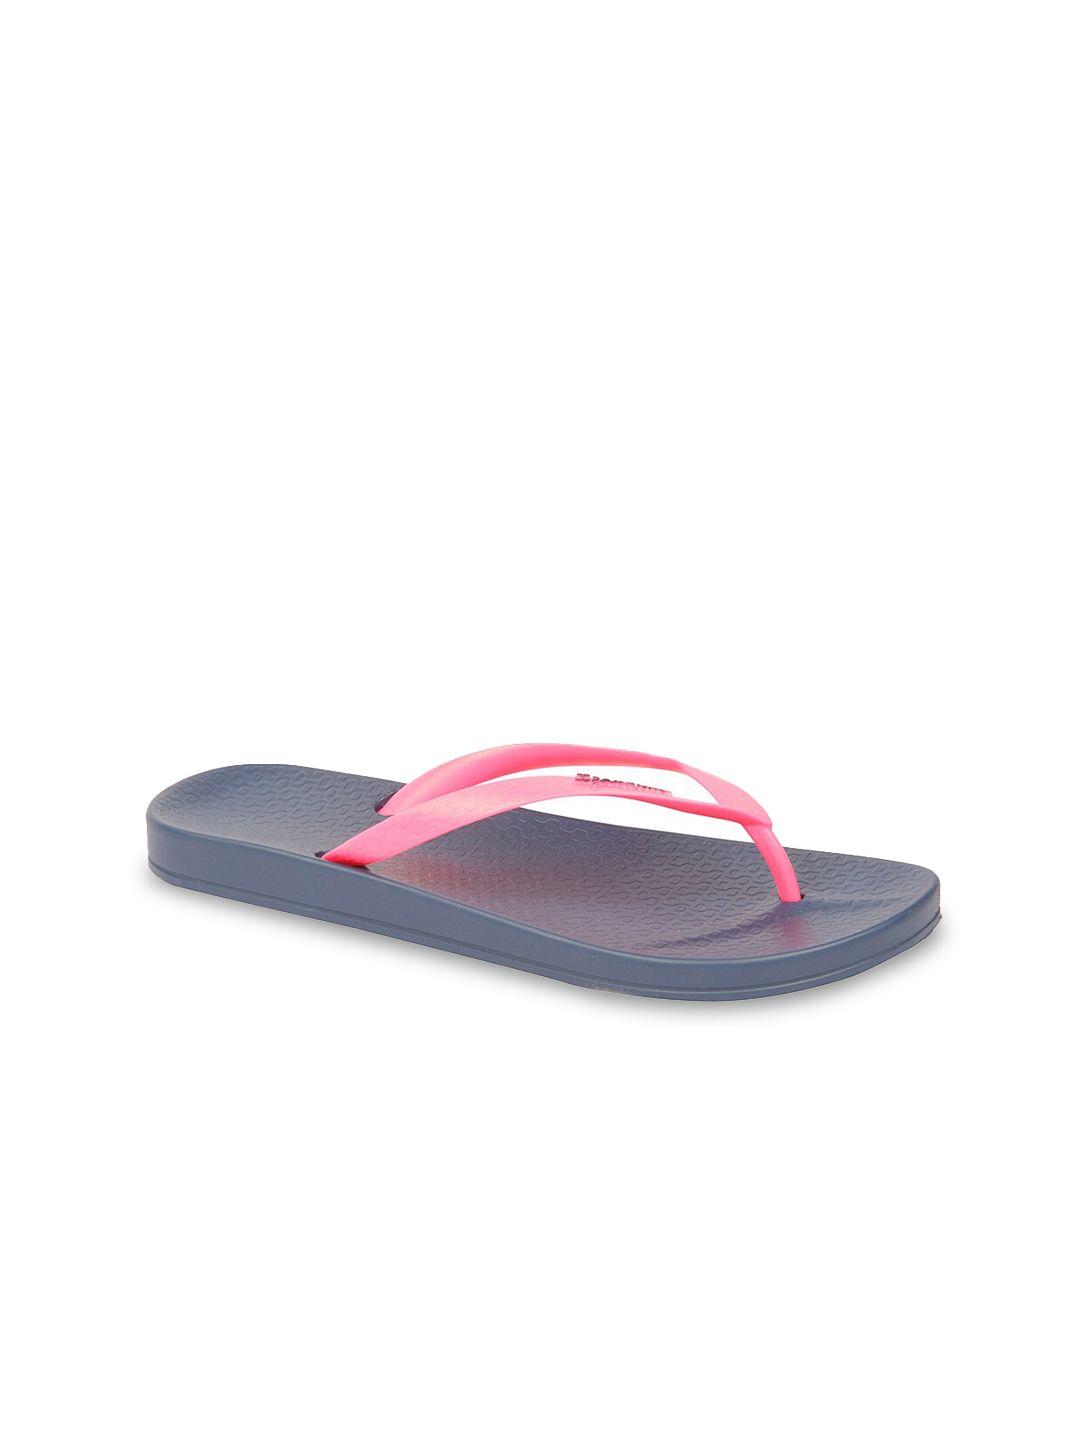 ipanema women blue & pink thong flip-flops